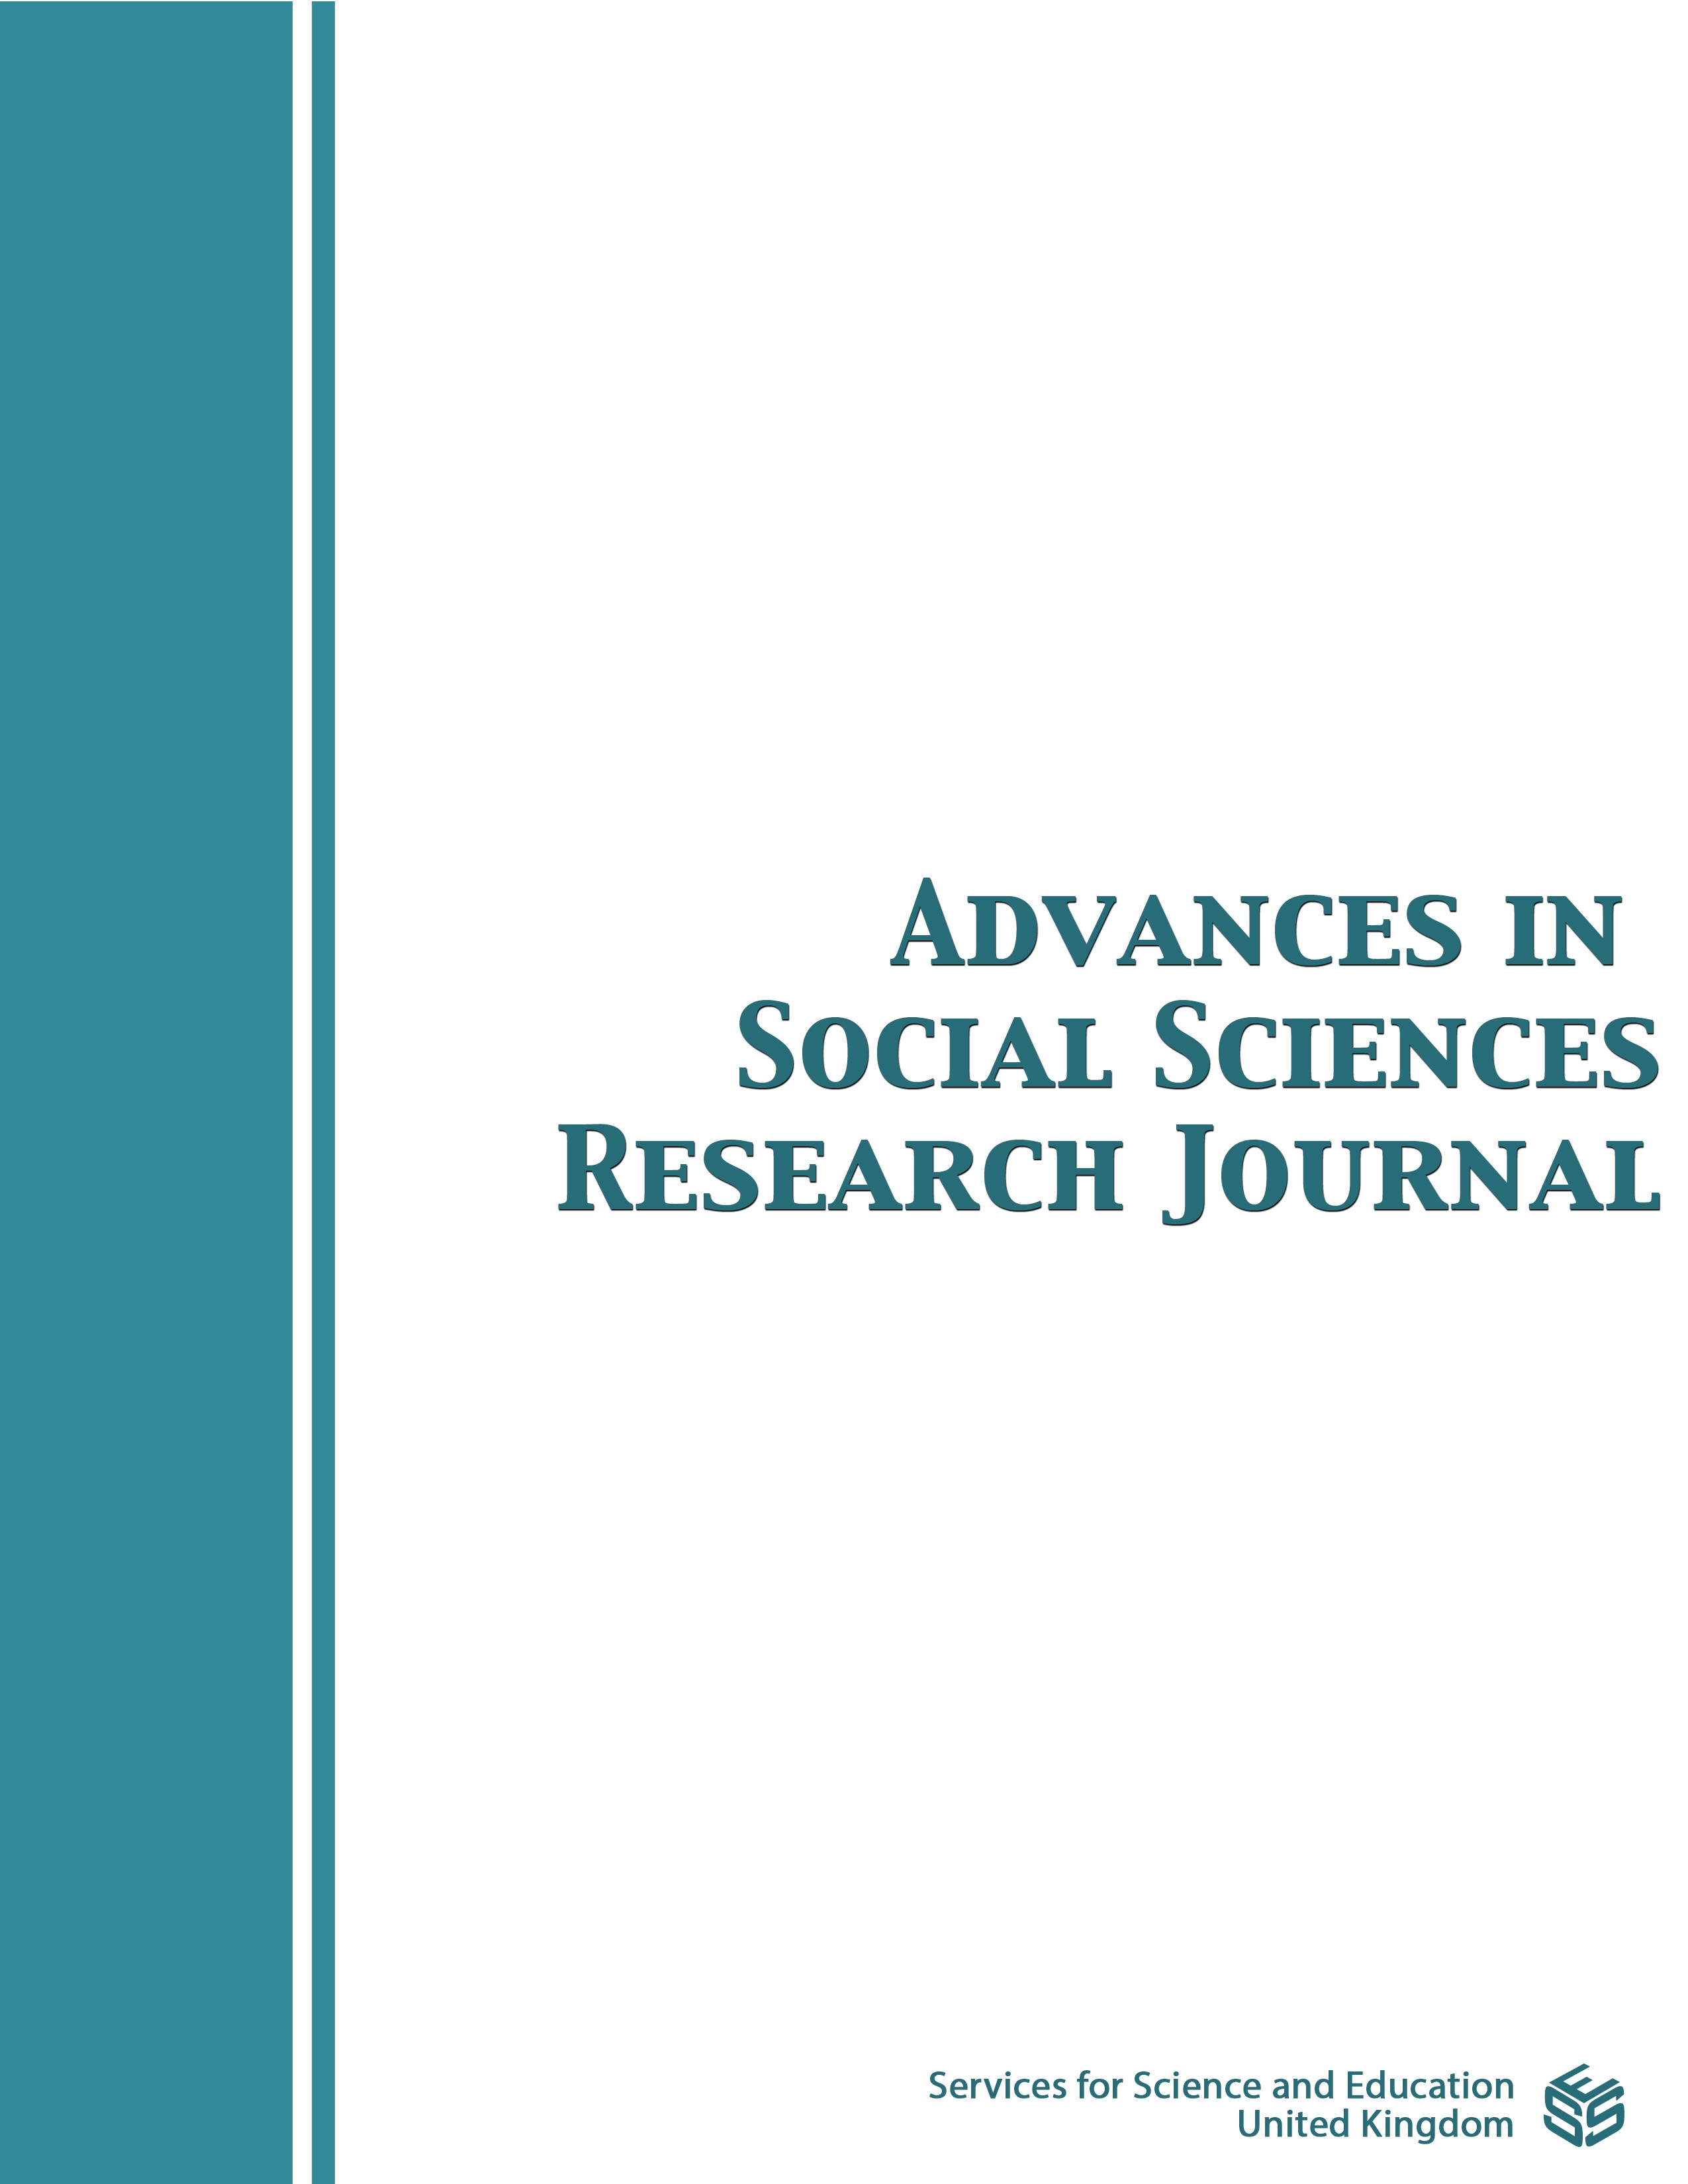 					View Vol. 8 No. 9 (2021): Advances in Social Sciences Research Journal 
				